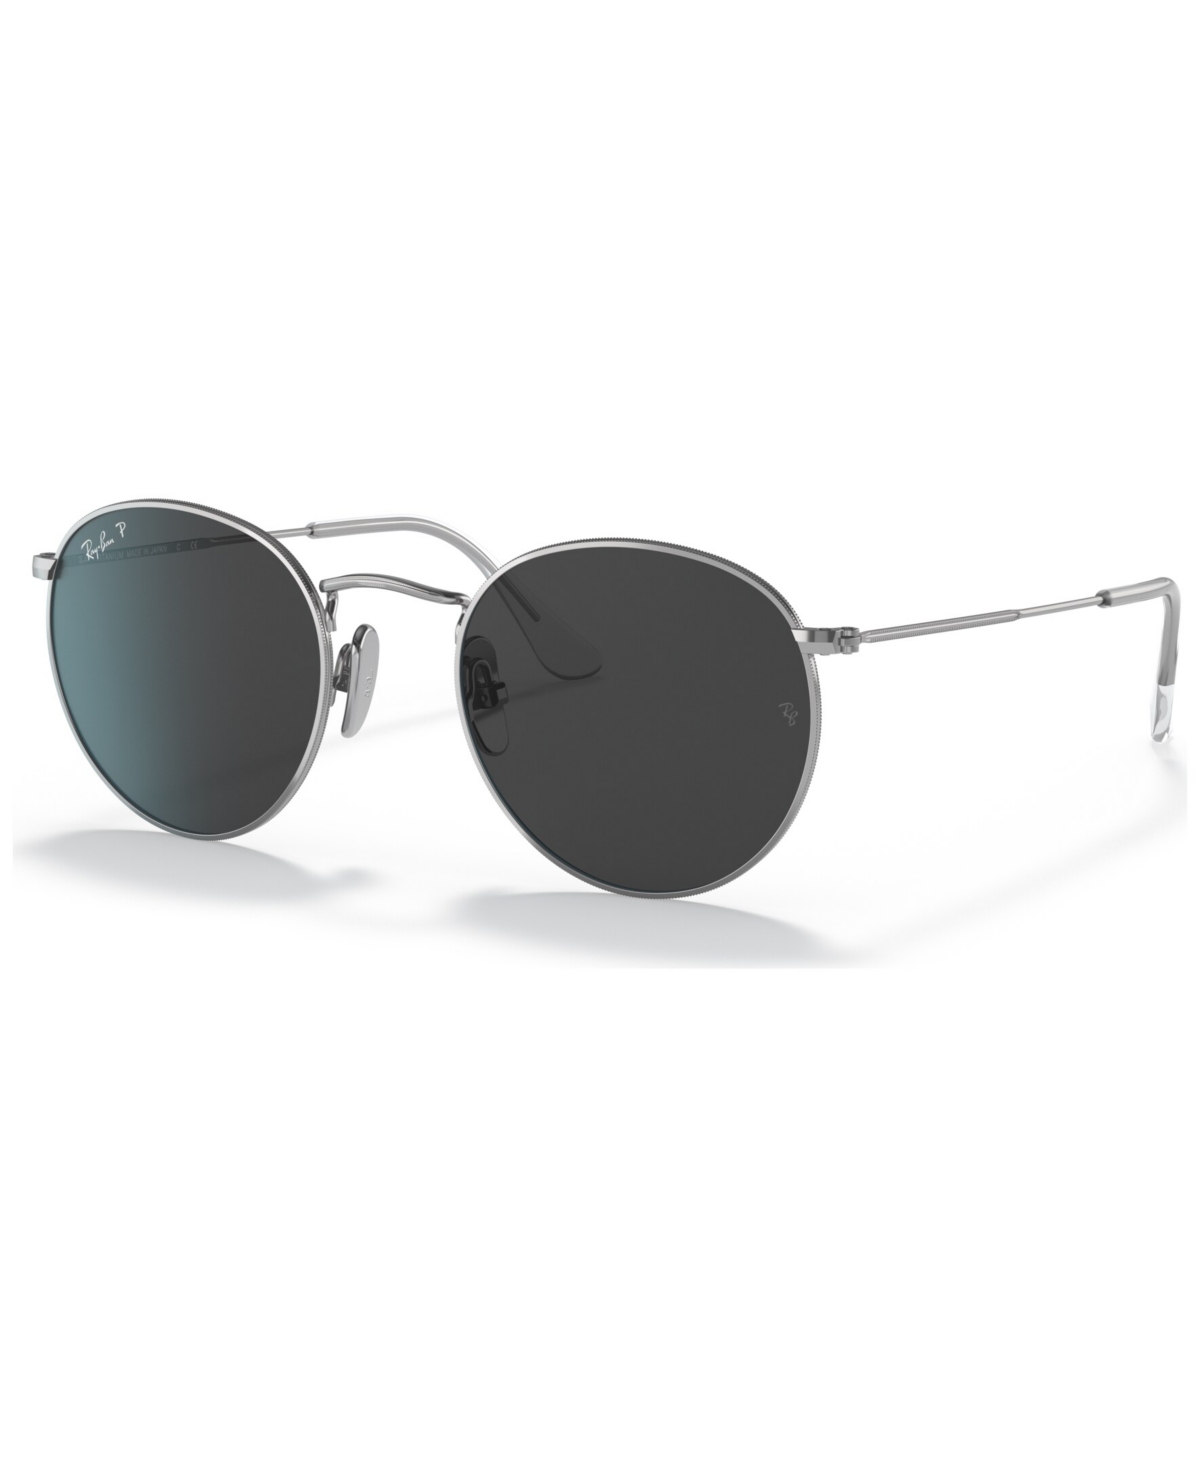 Ray Ban Unisex Polarized Sunglasses, Round Titanium In Silver-tone